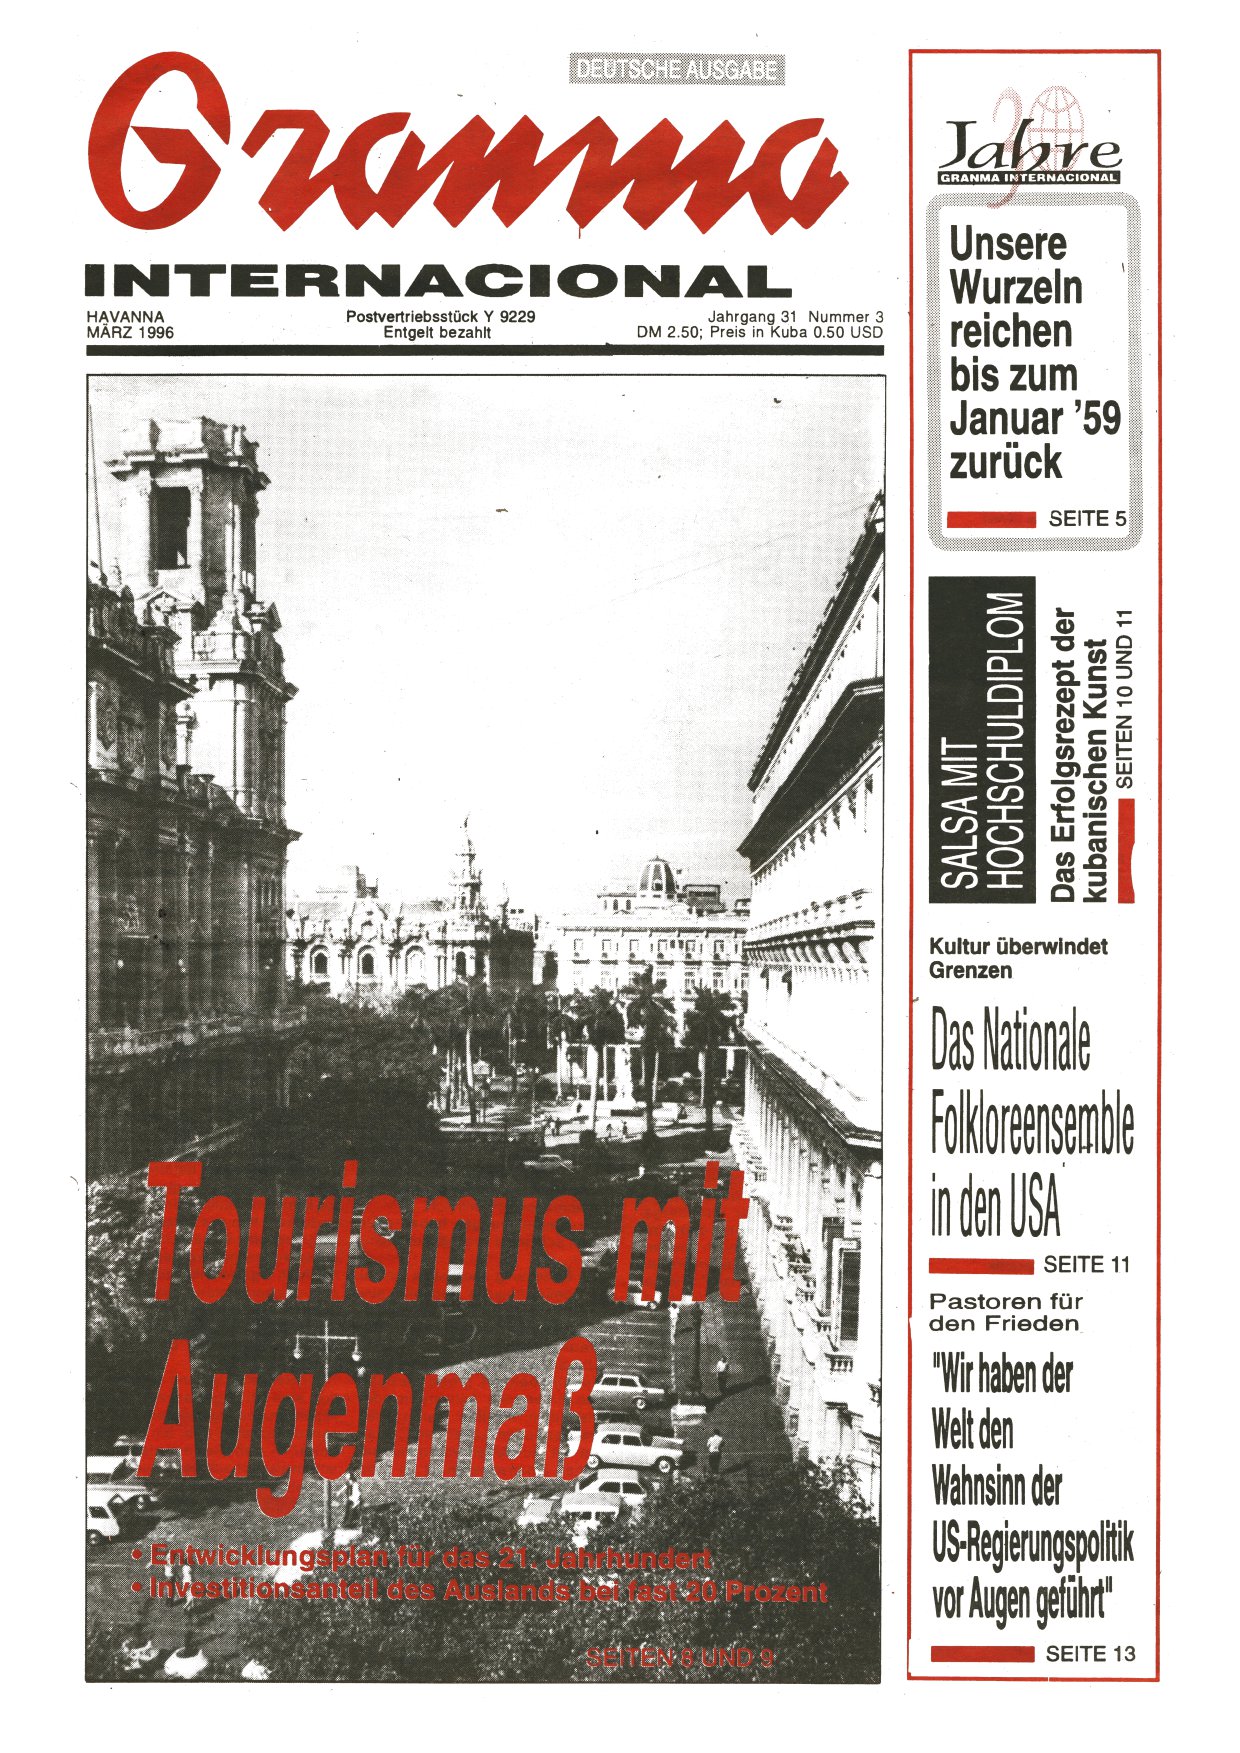 Granma Internacional März 1996